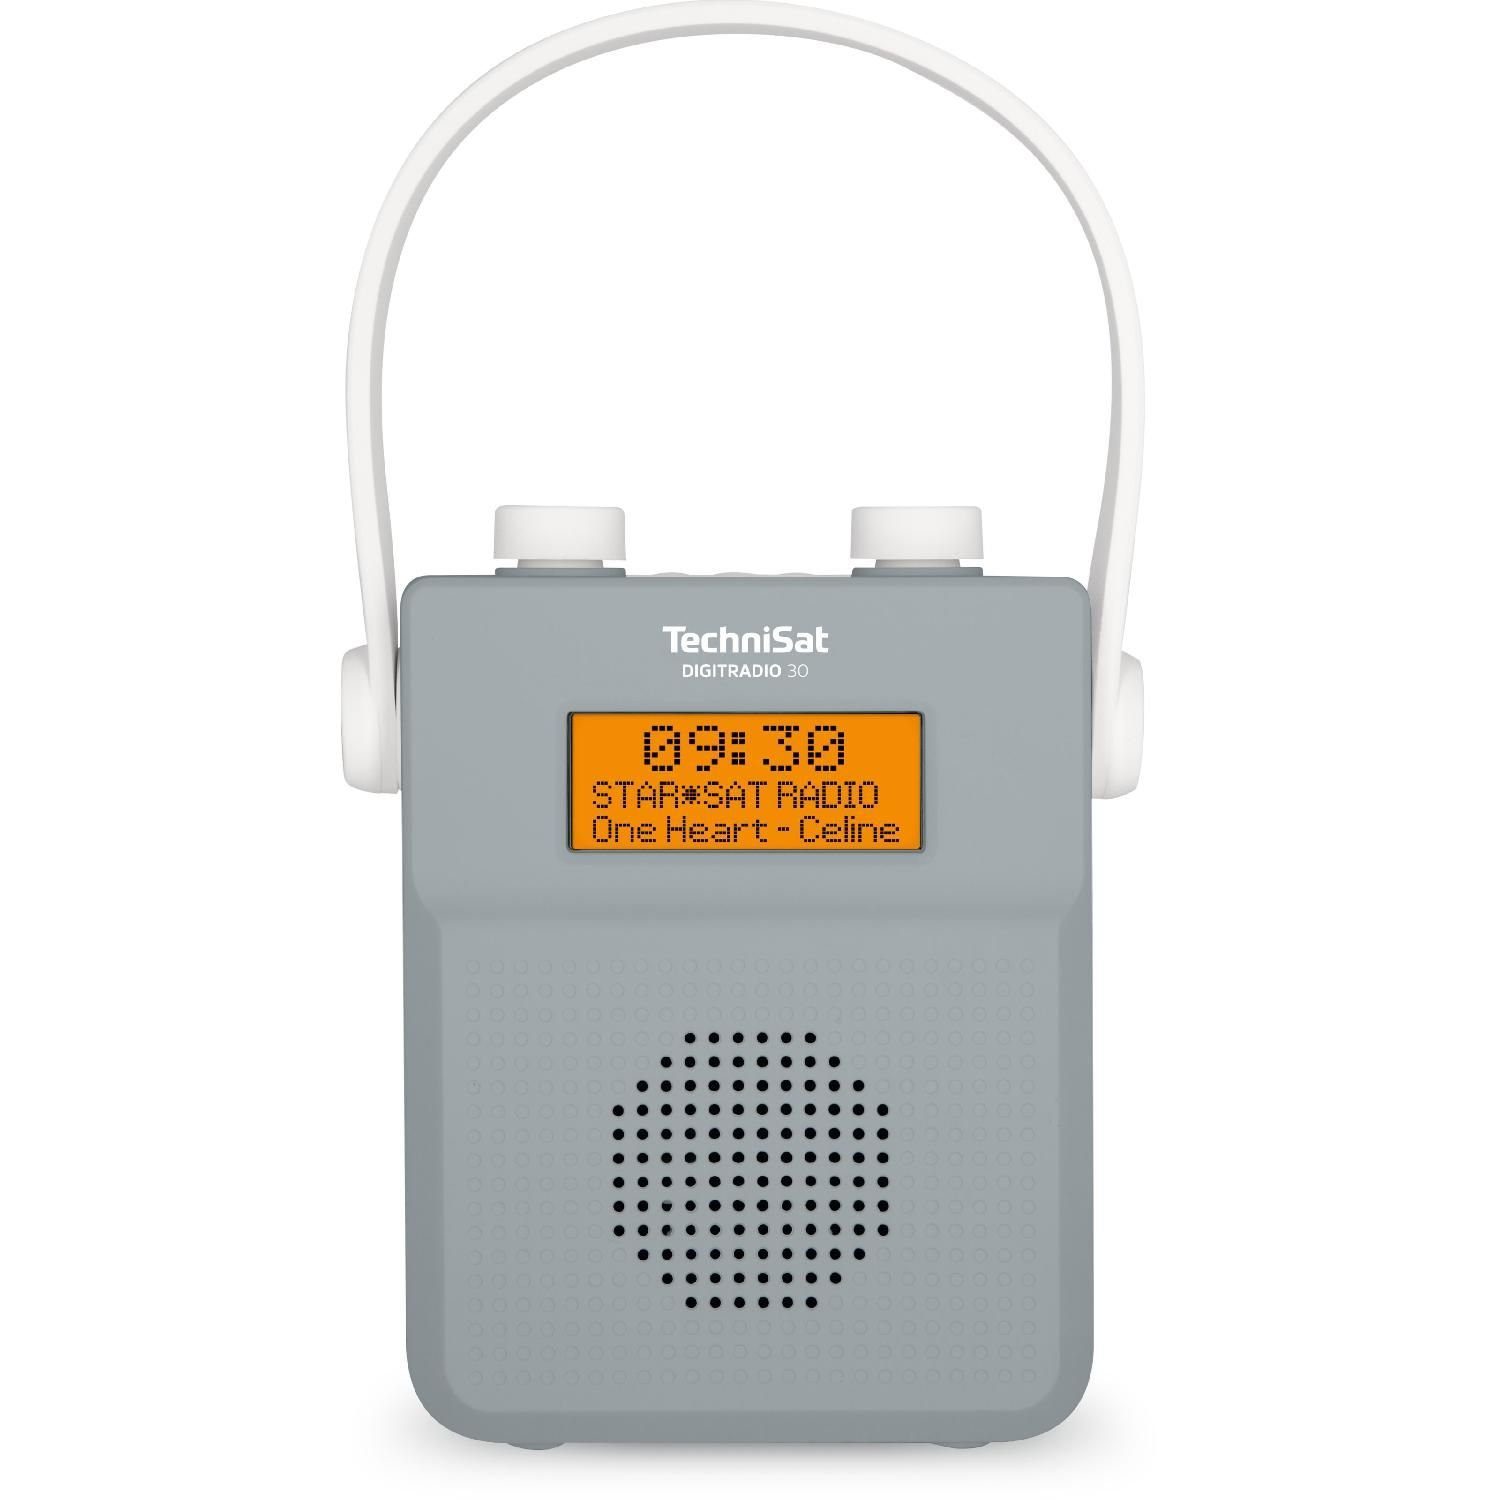 TechniSat »DIGITRADIO 30 DAB+ Digitalradio (Duschradio, Wasserdicht, DAB+,  Bluetooth, UKW, FM, RDS, LCD)« Retro-Radio online kaufen | OTTO